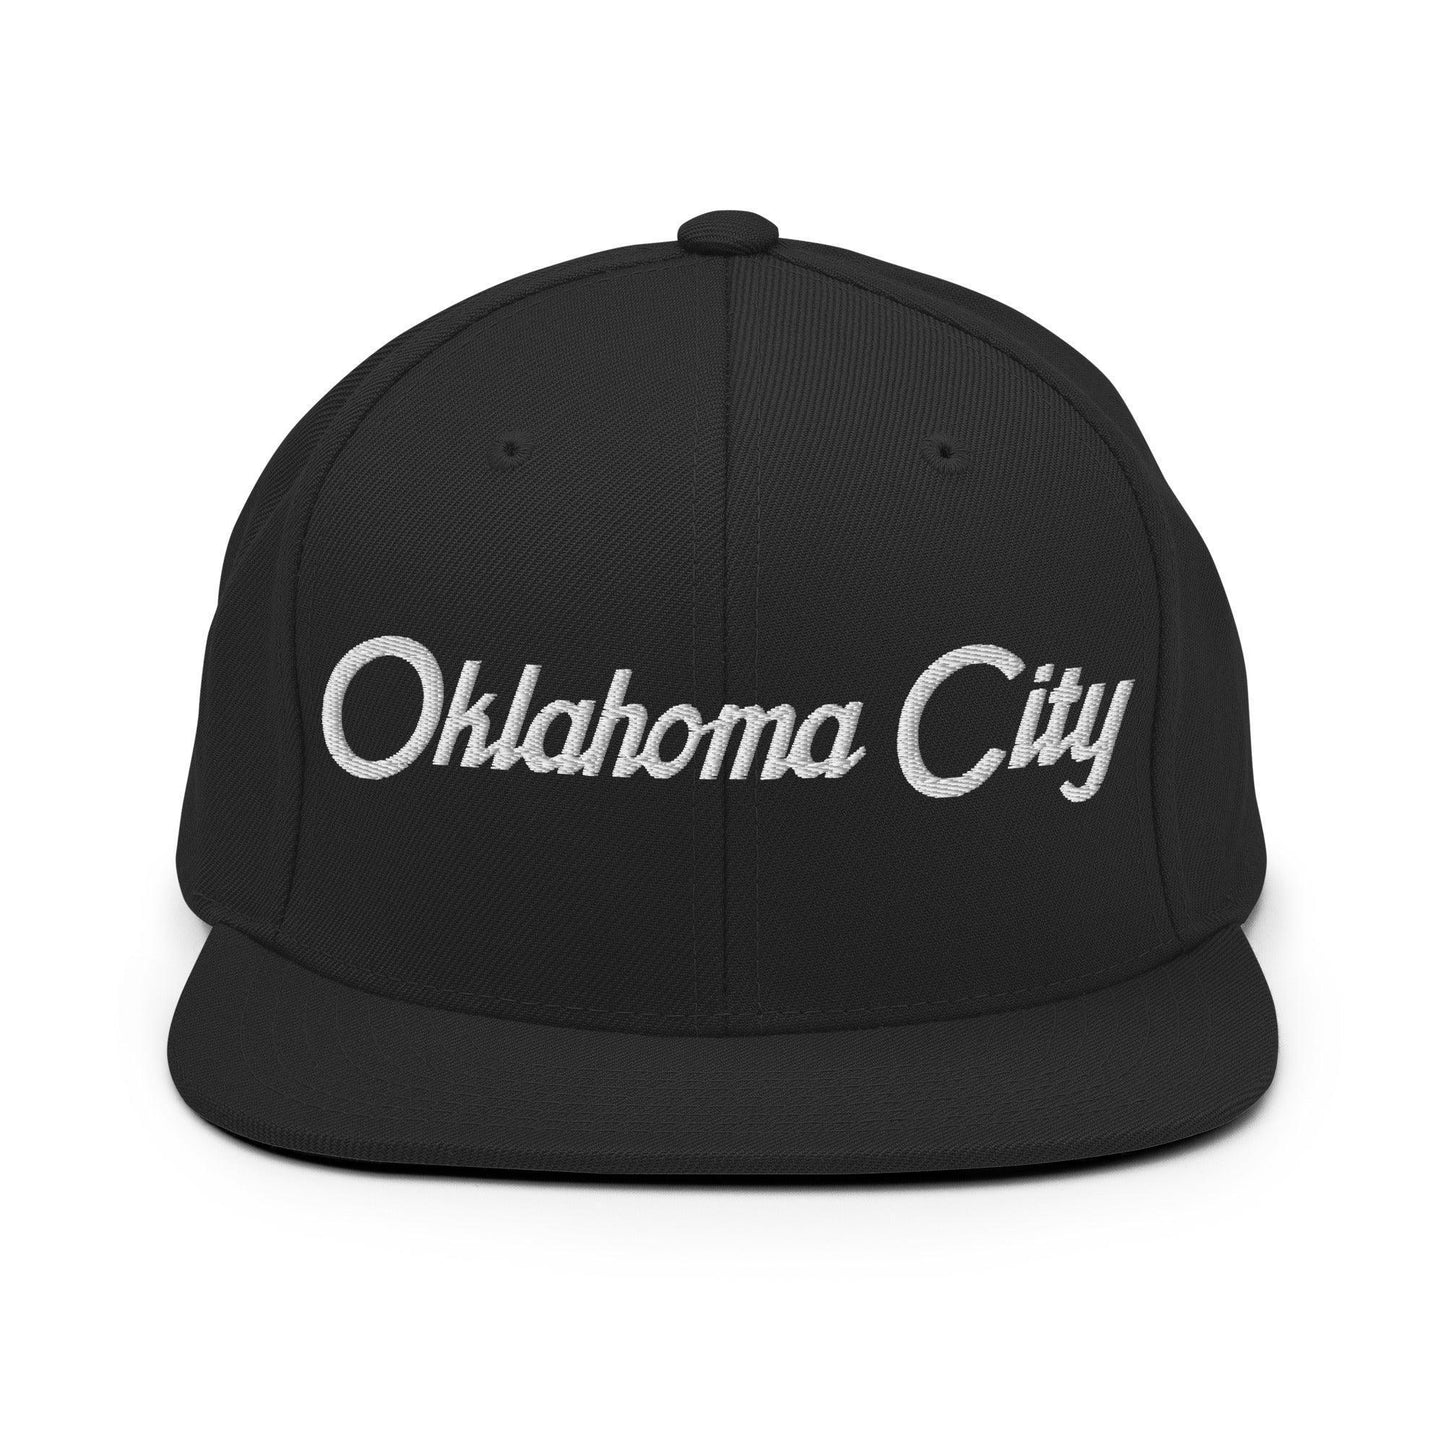 Oklahoma City Script Snapback Hat Black